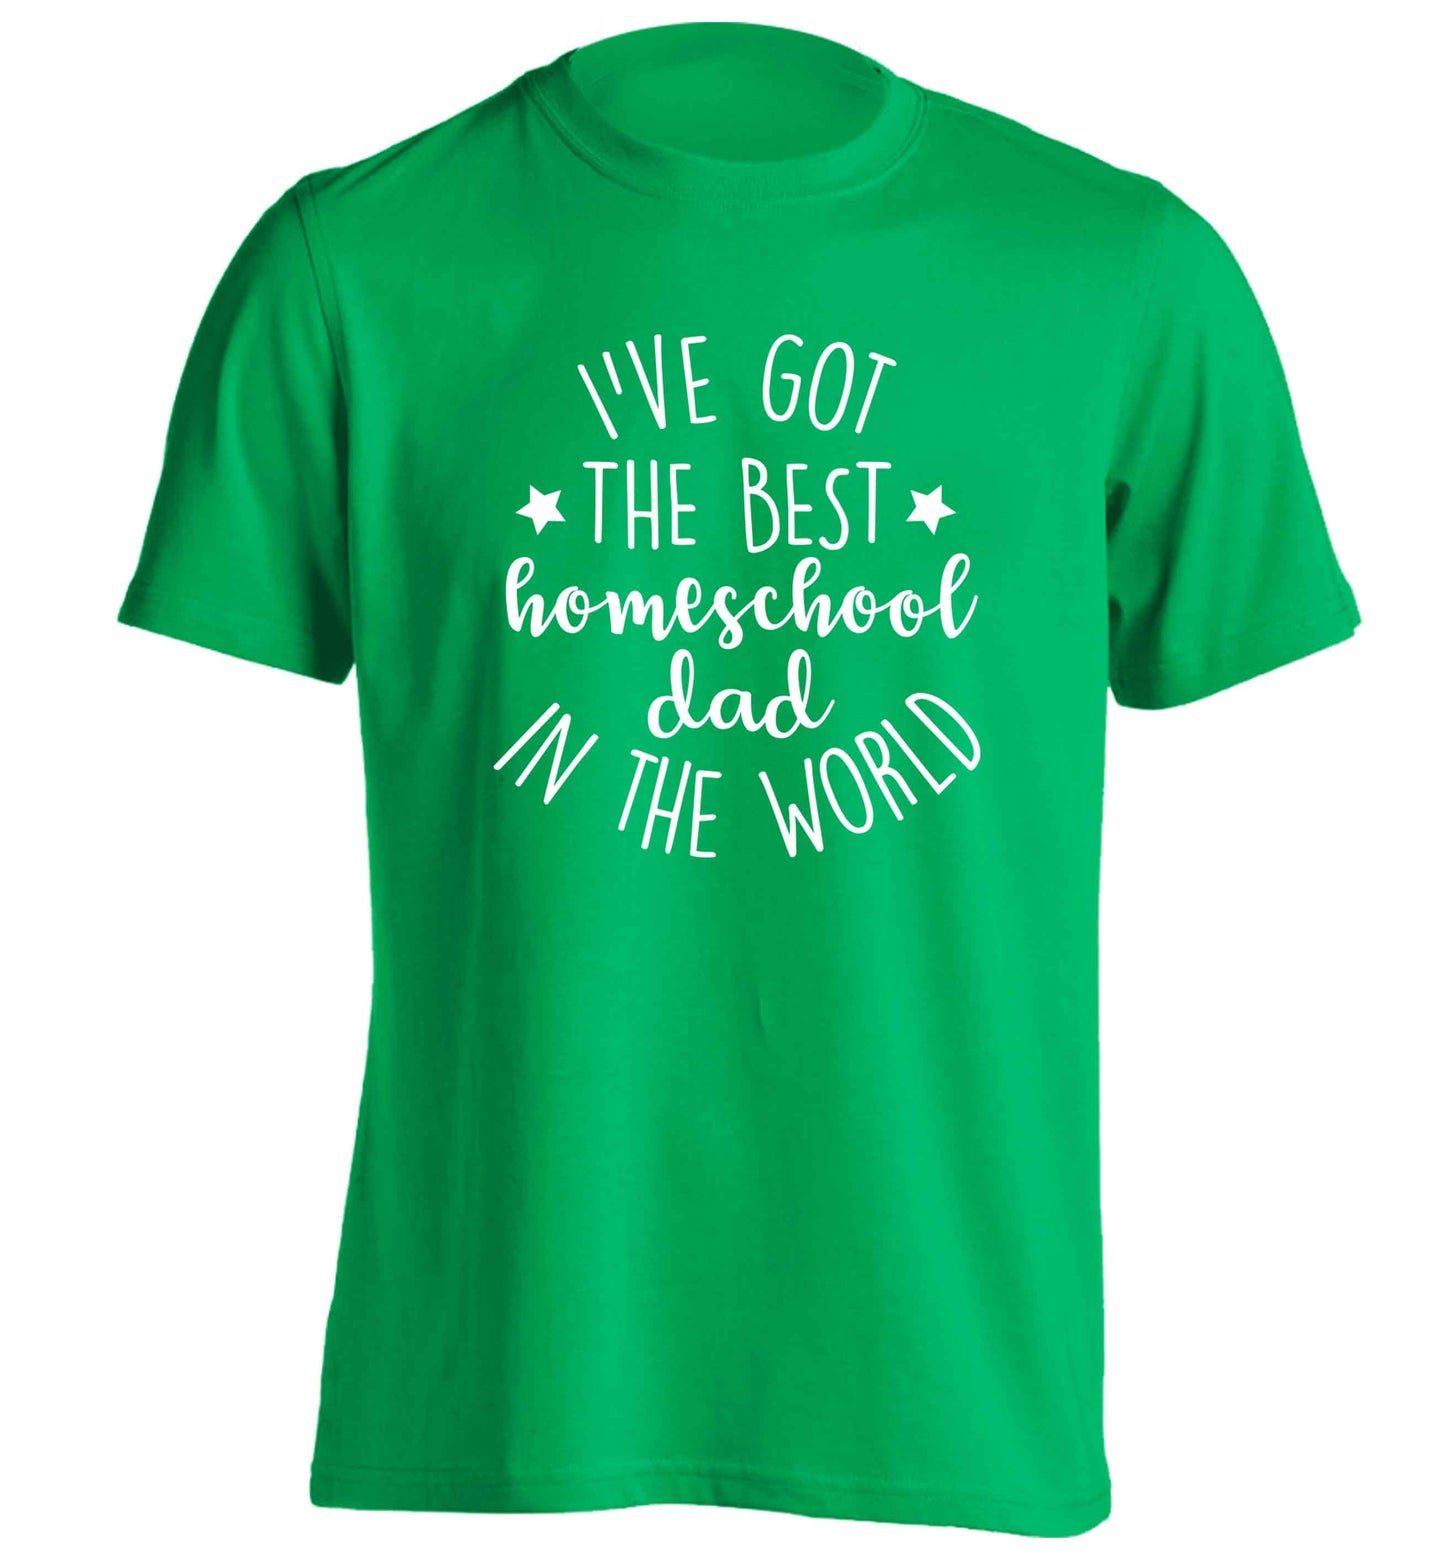 I've got the best homeschool dad in the world adults unisex green Tshirt 2XL